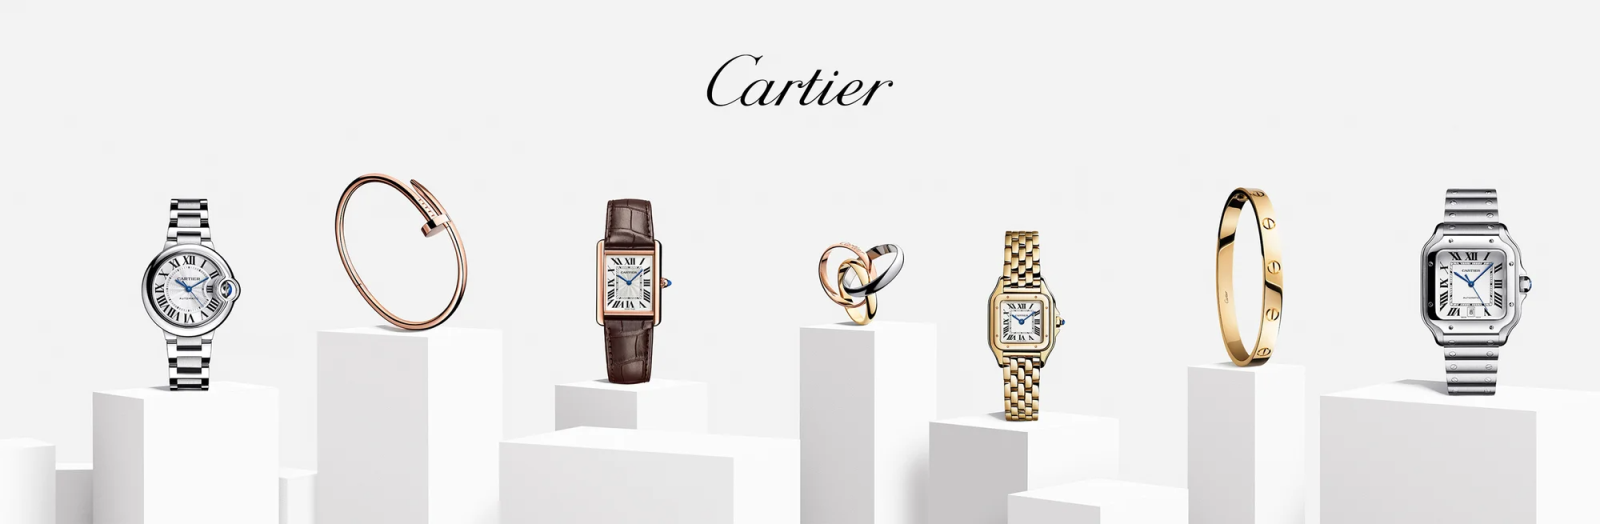 Đặc điểm đồng hồ Cartier